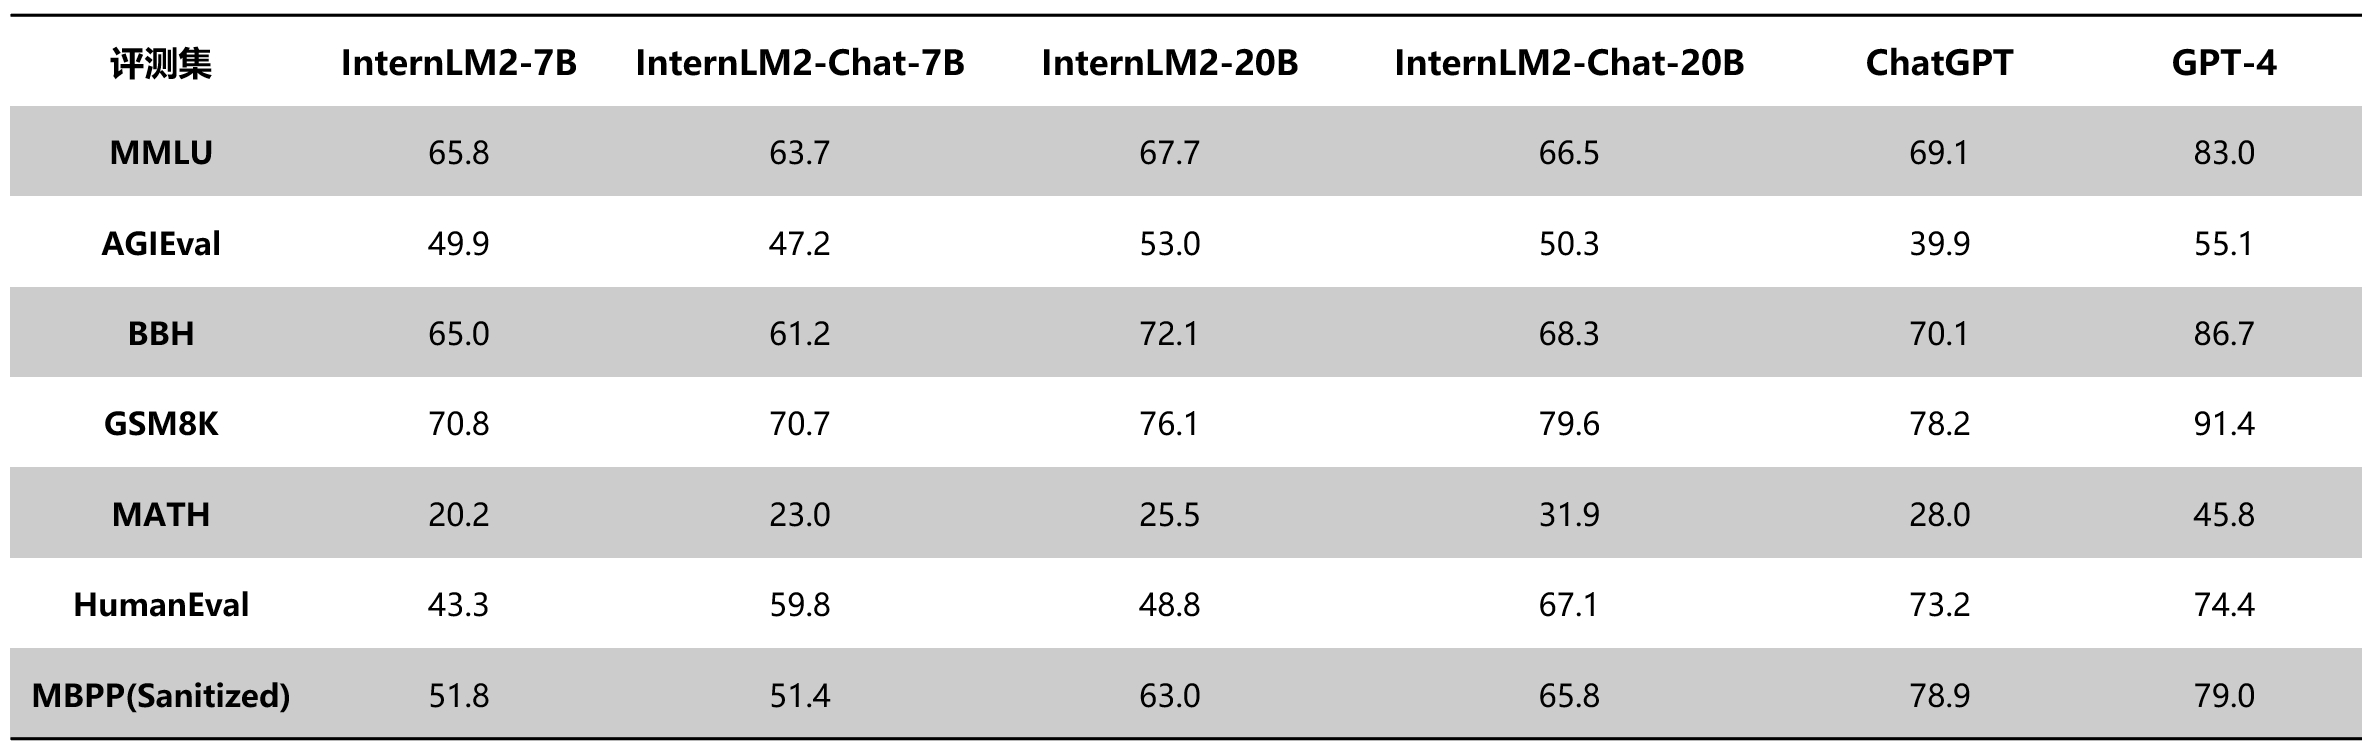 图6 InternLM2与ChatGPT的评测结果对比.png